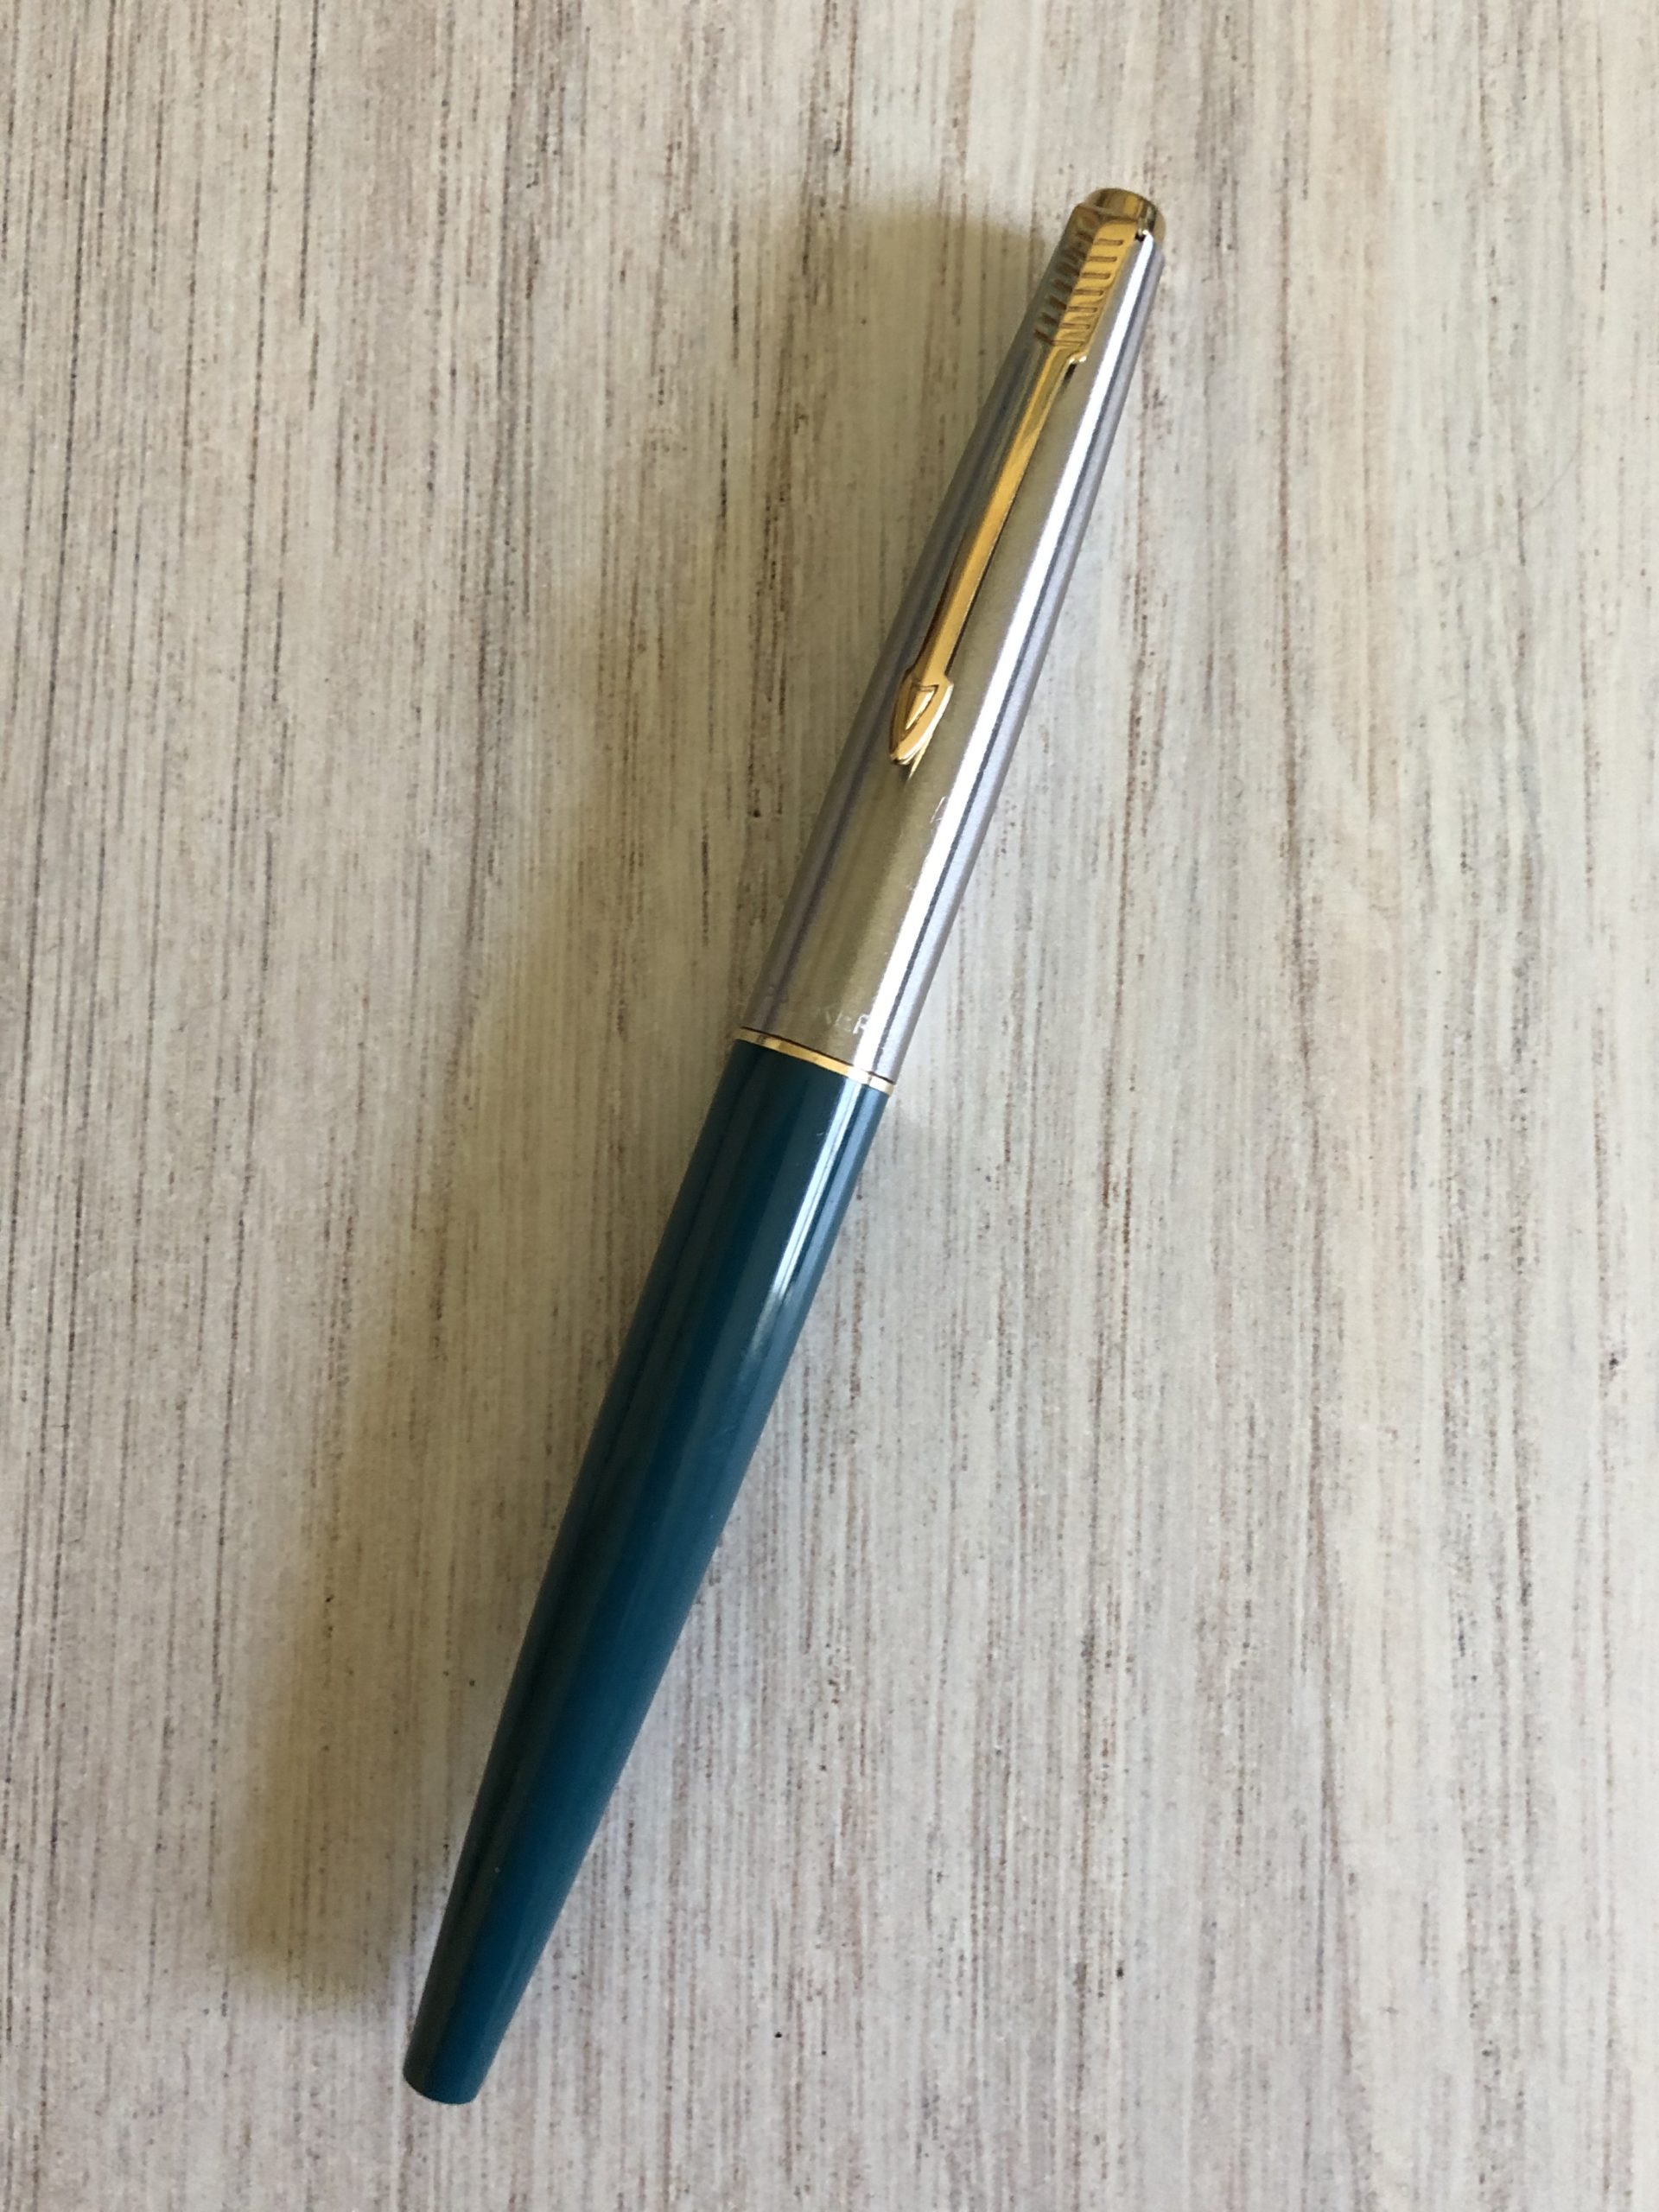 How do you set up a parker pen?